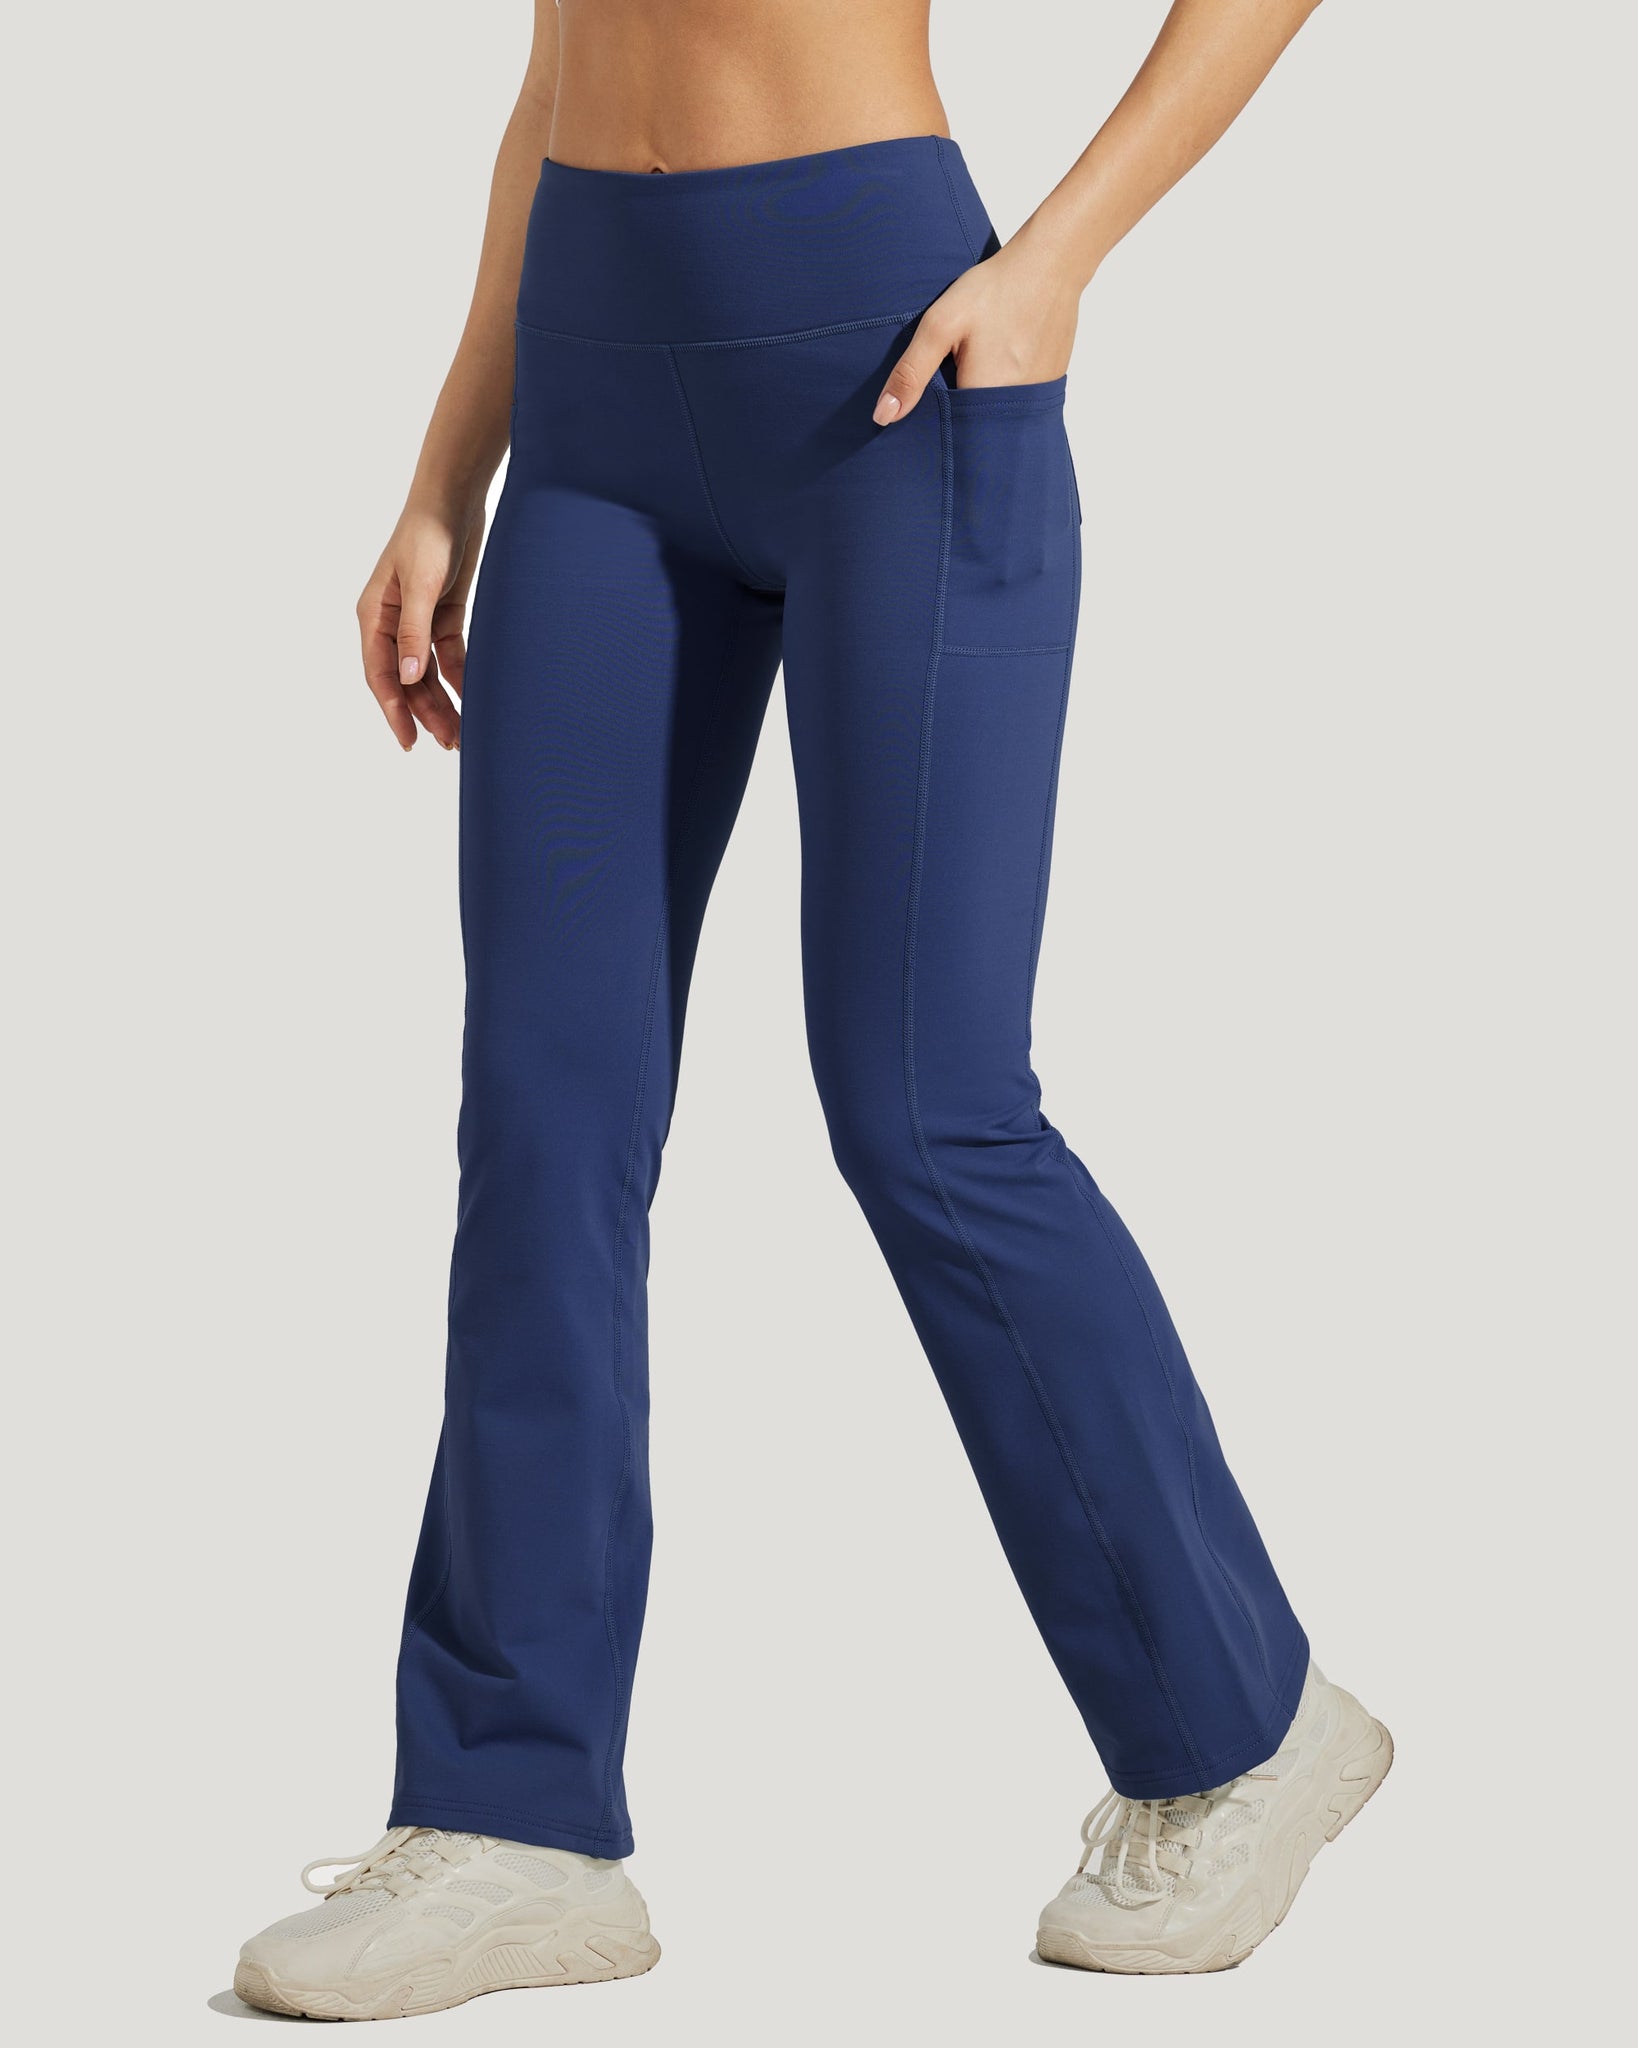 Women's Fleece Lined Bootcut Yoga Pants_Navy_model4